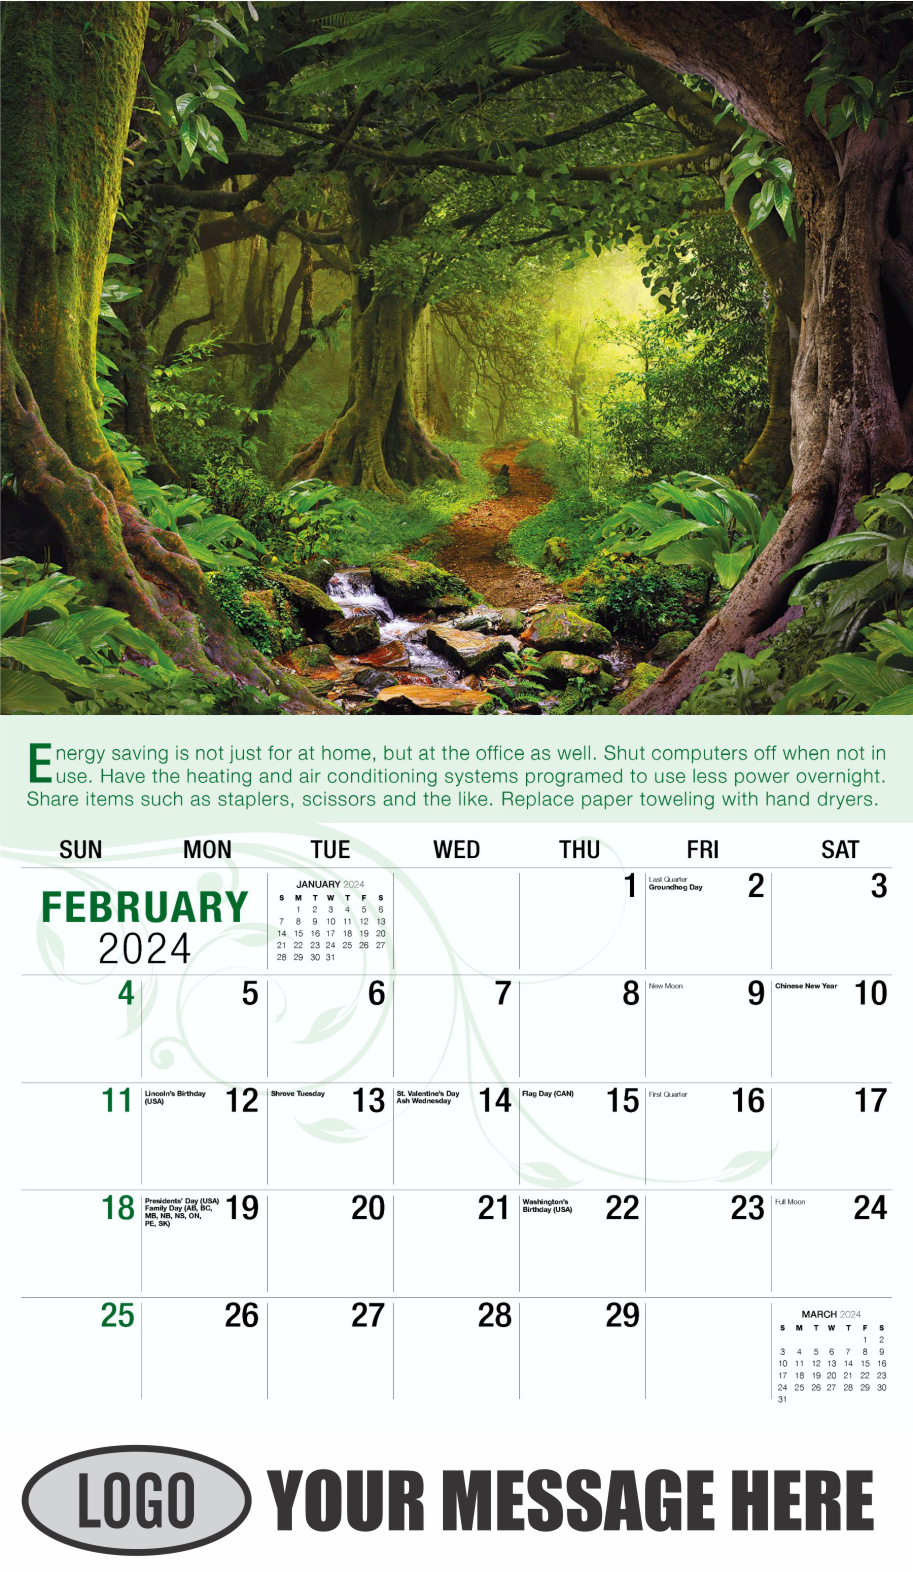 Go Green 2024 Business Promotion Calendar - February